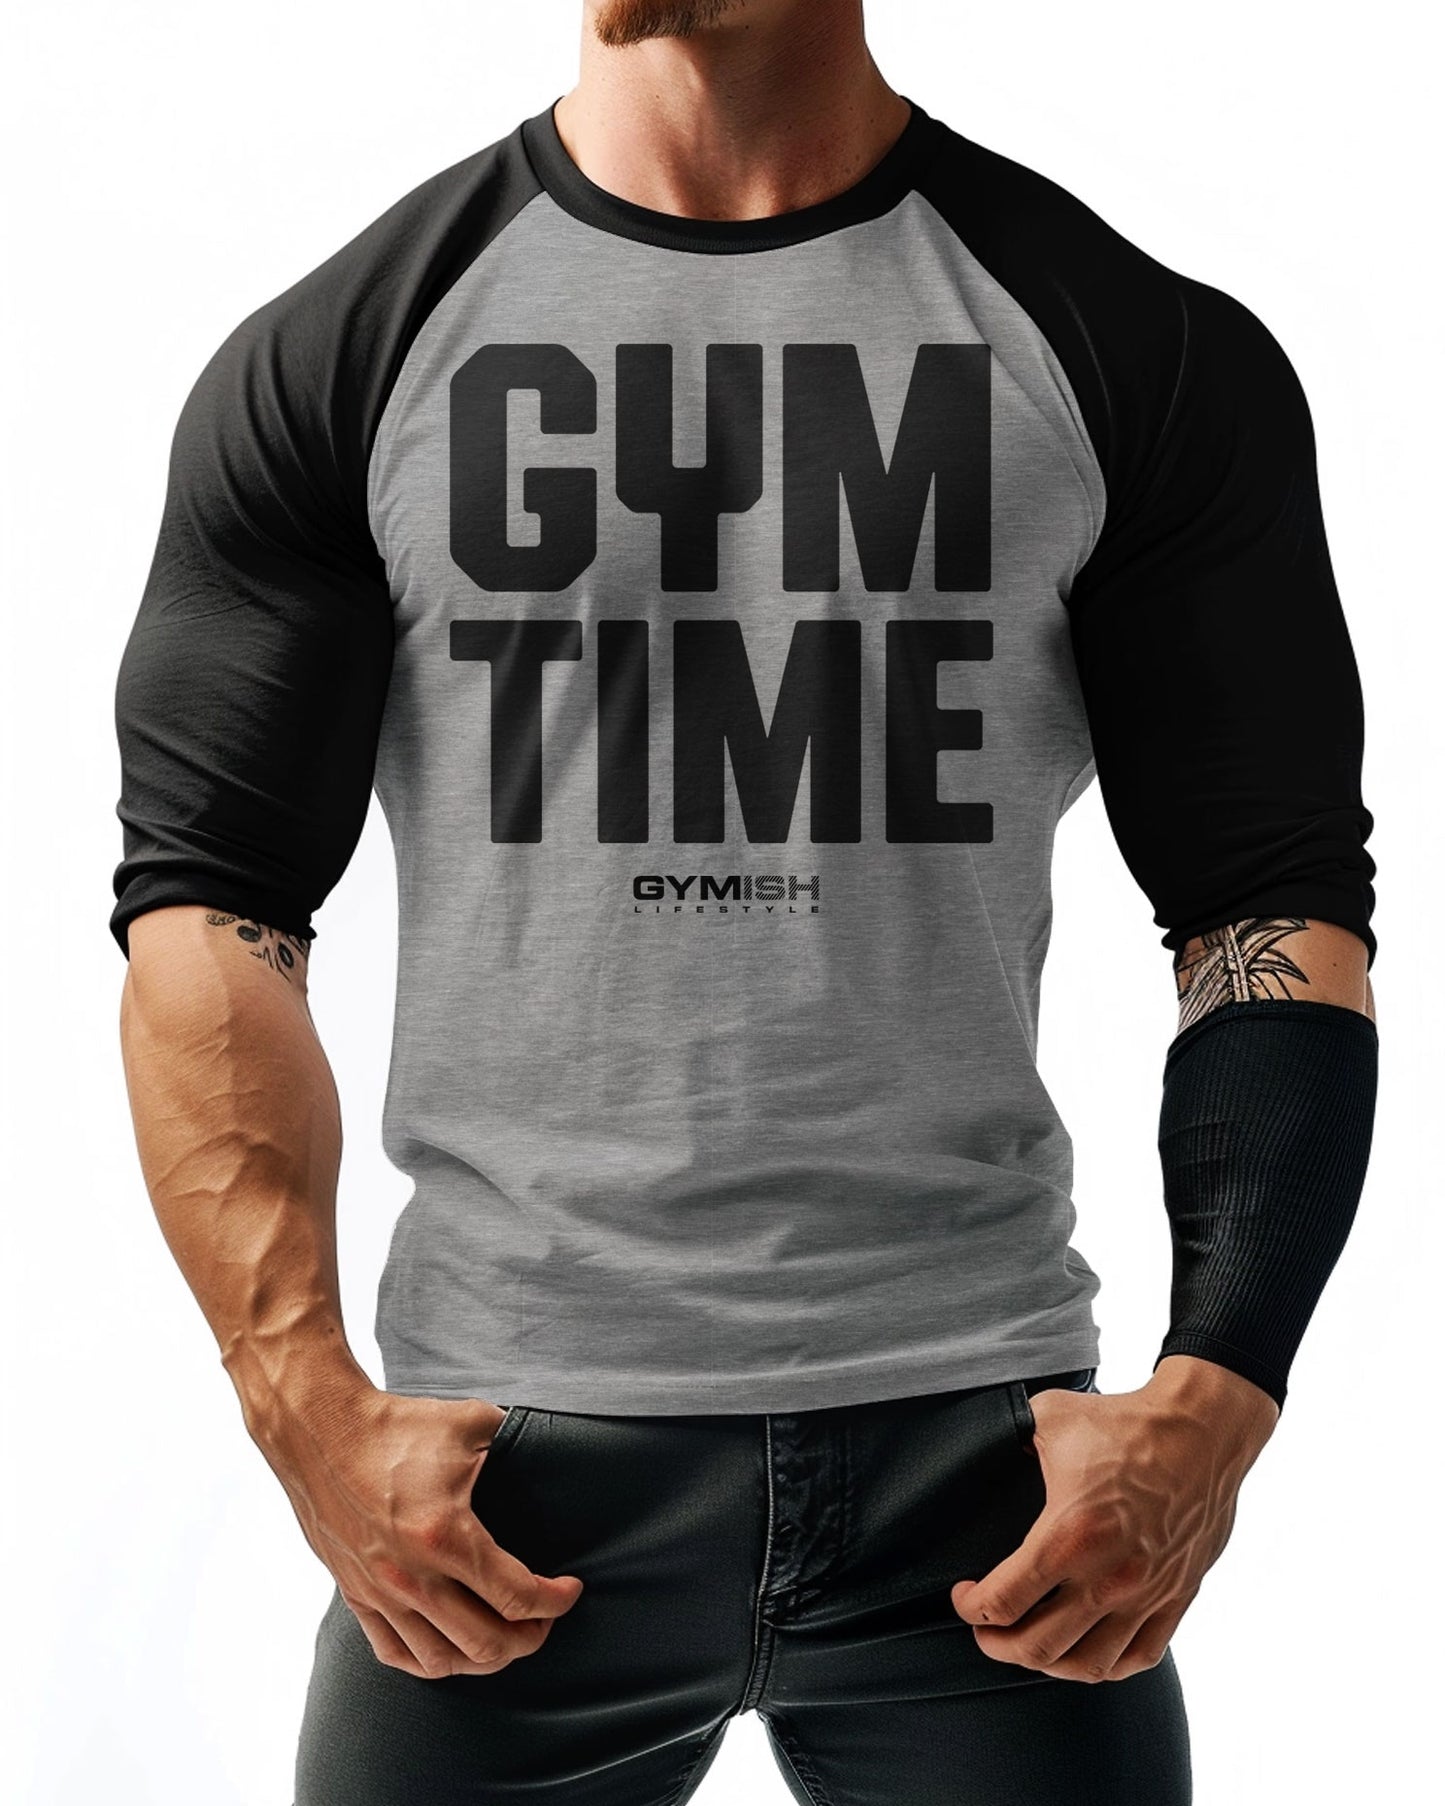 19- RAGLAN Gym Time Workout Gym Shirt for Men